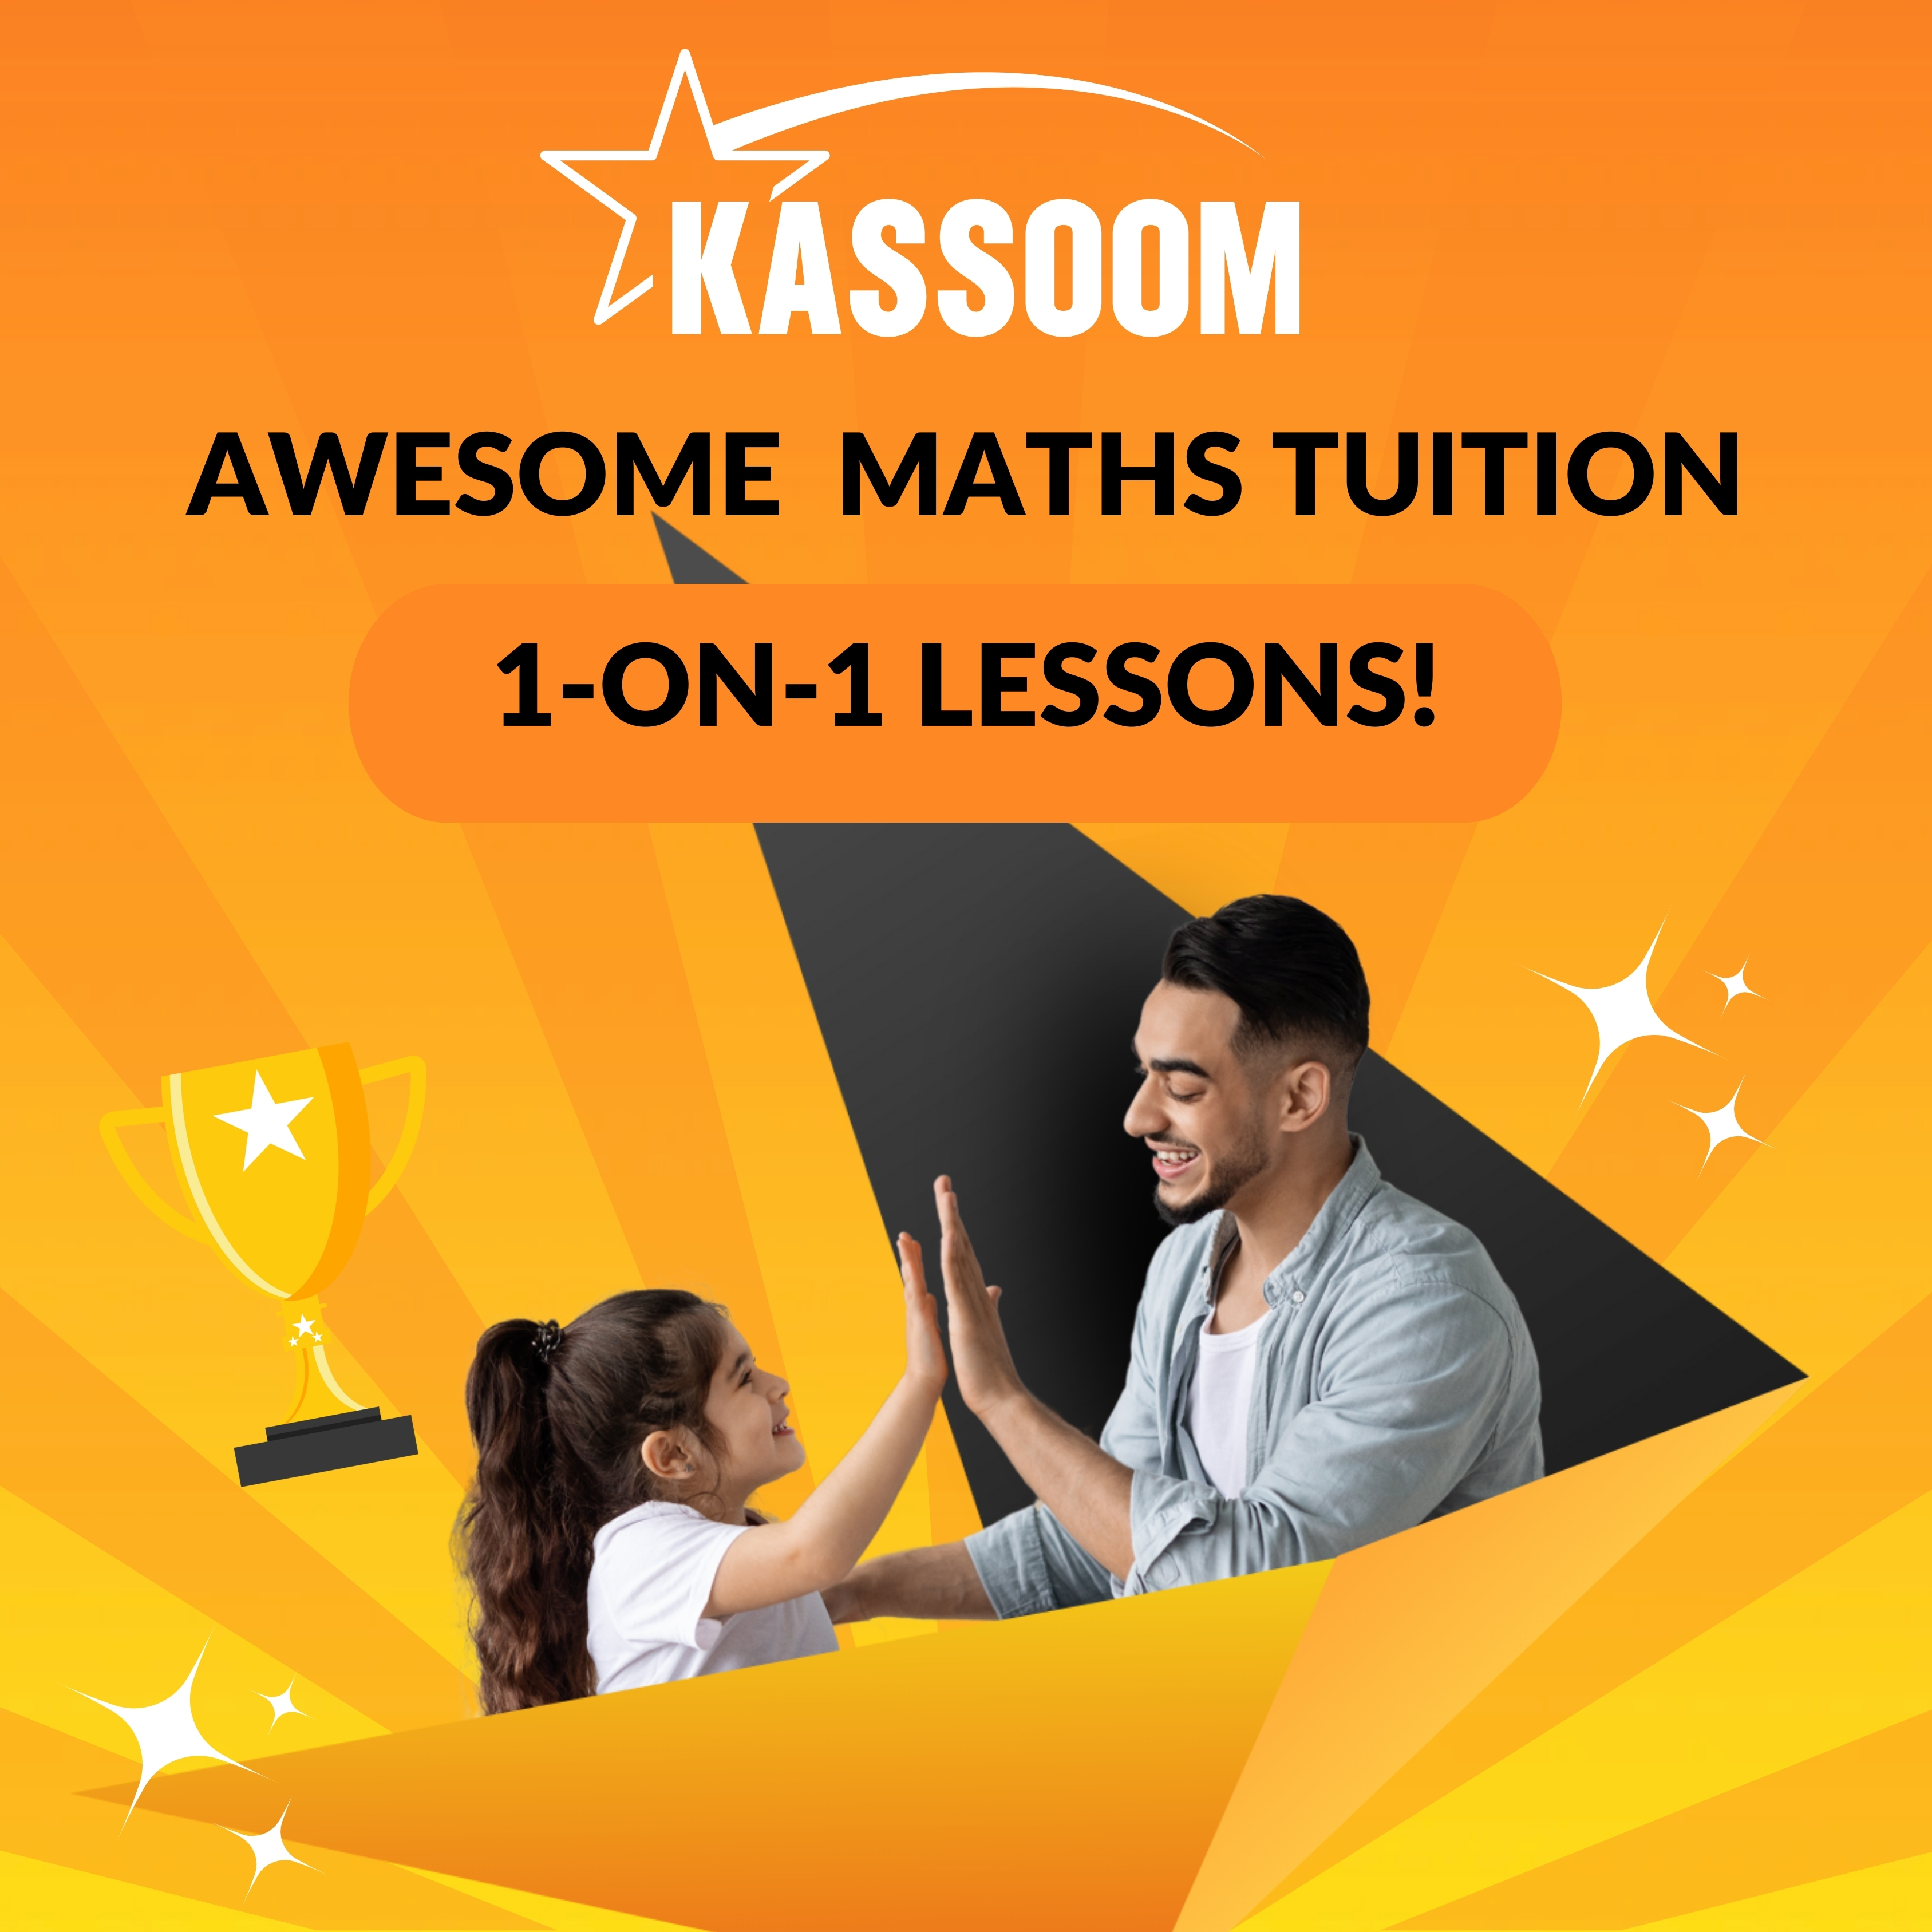 Awesome Maths Tutoring – Kassoom – Birmingham